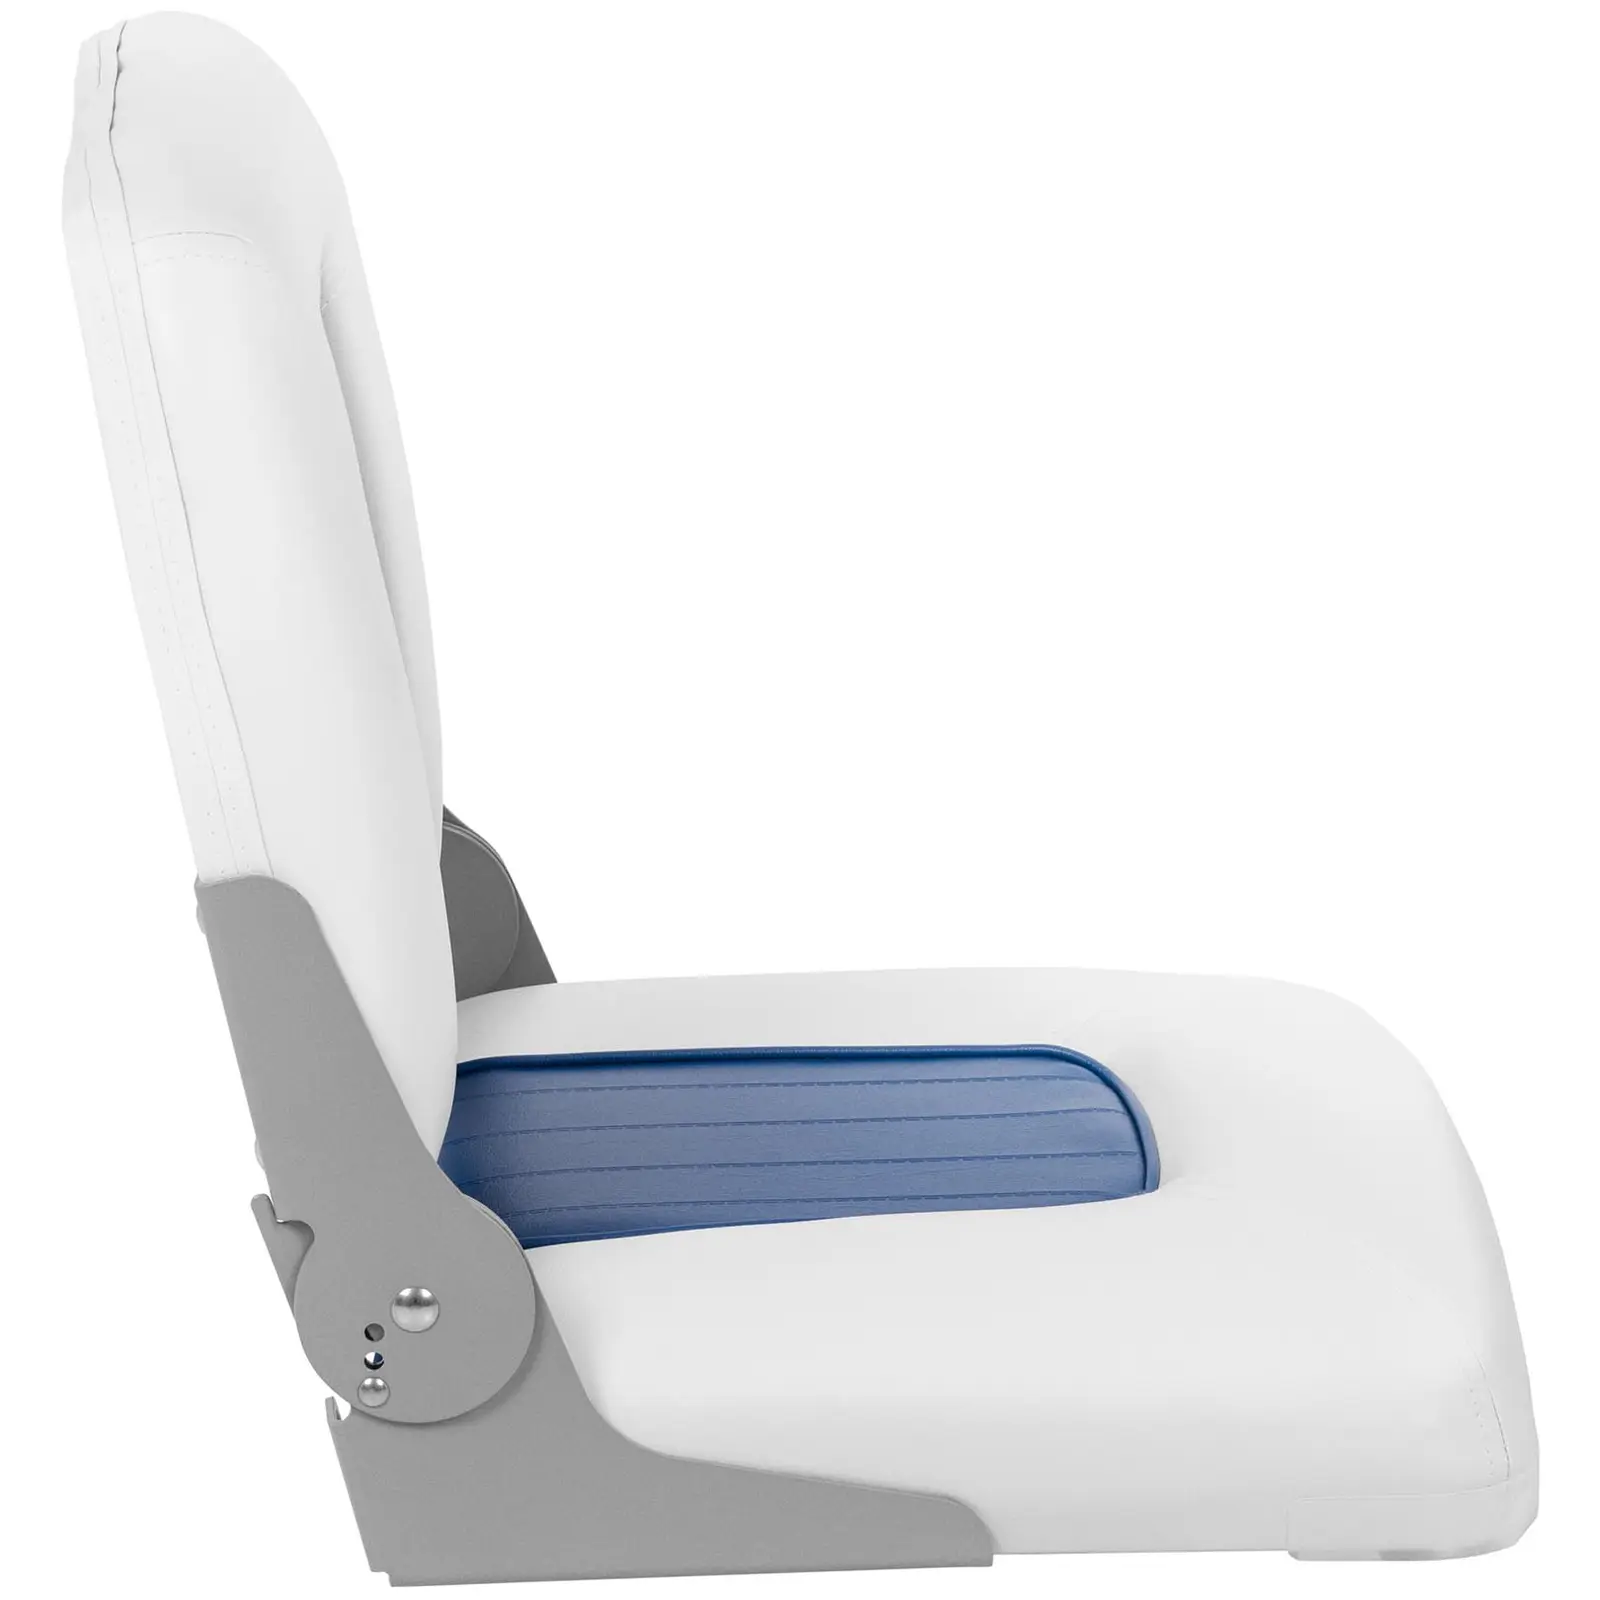 Boat Seat - 38x42x46 cm - Blue, White